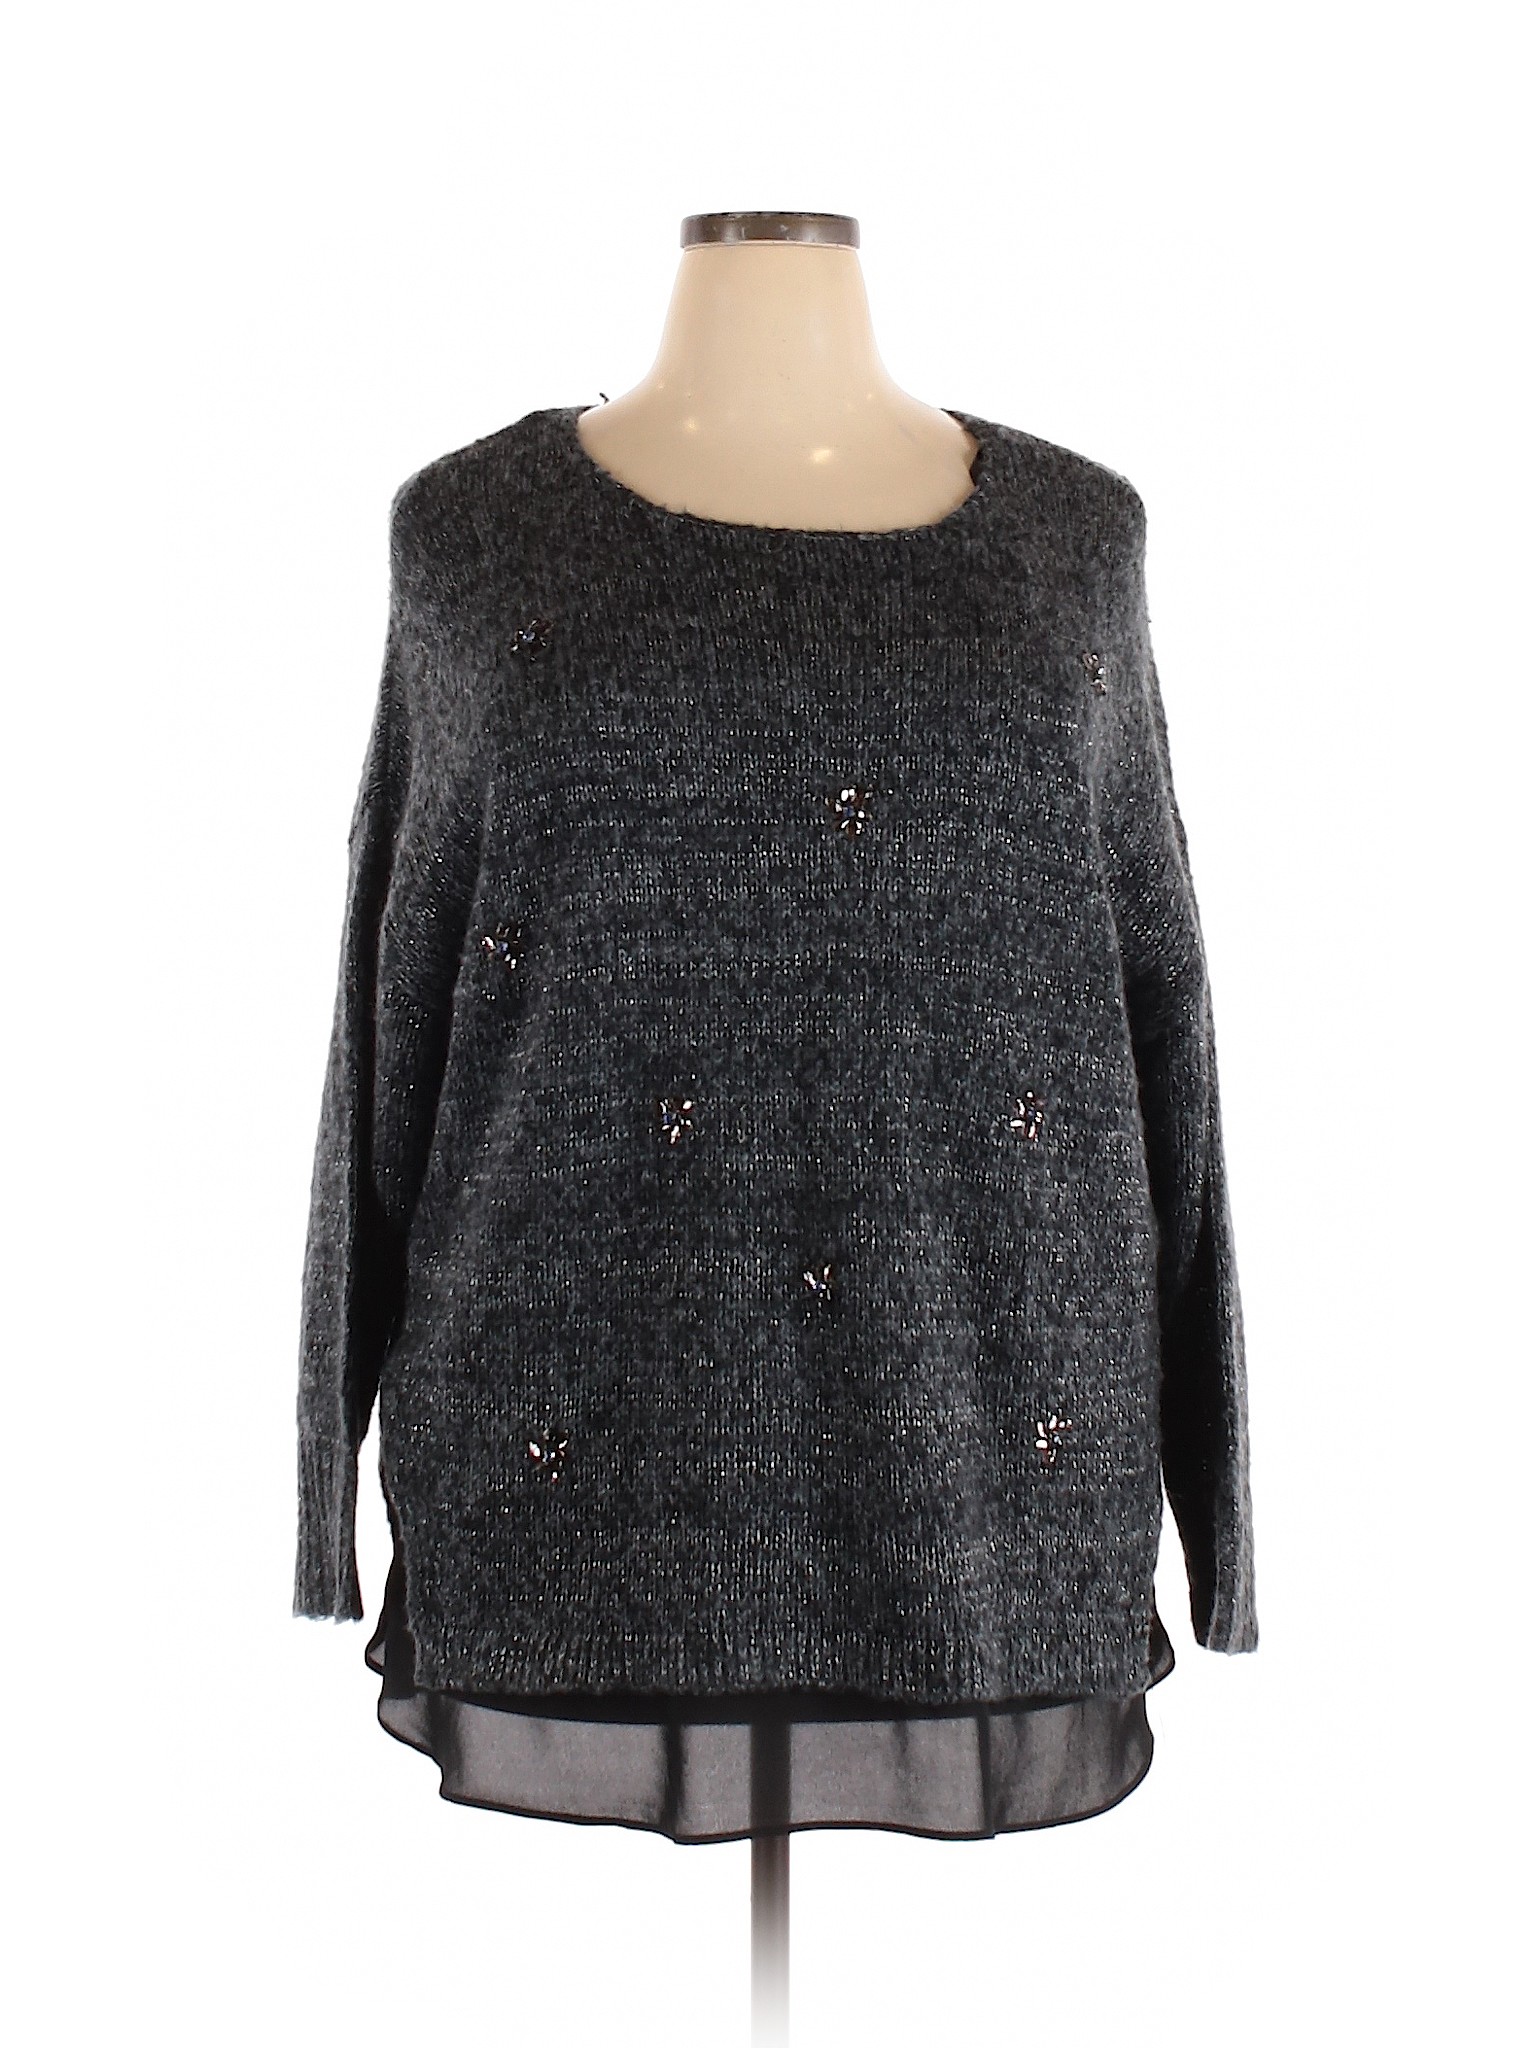 Jessica Simpson Women Gray Pullover Sweater 1X Plus | eBay